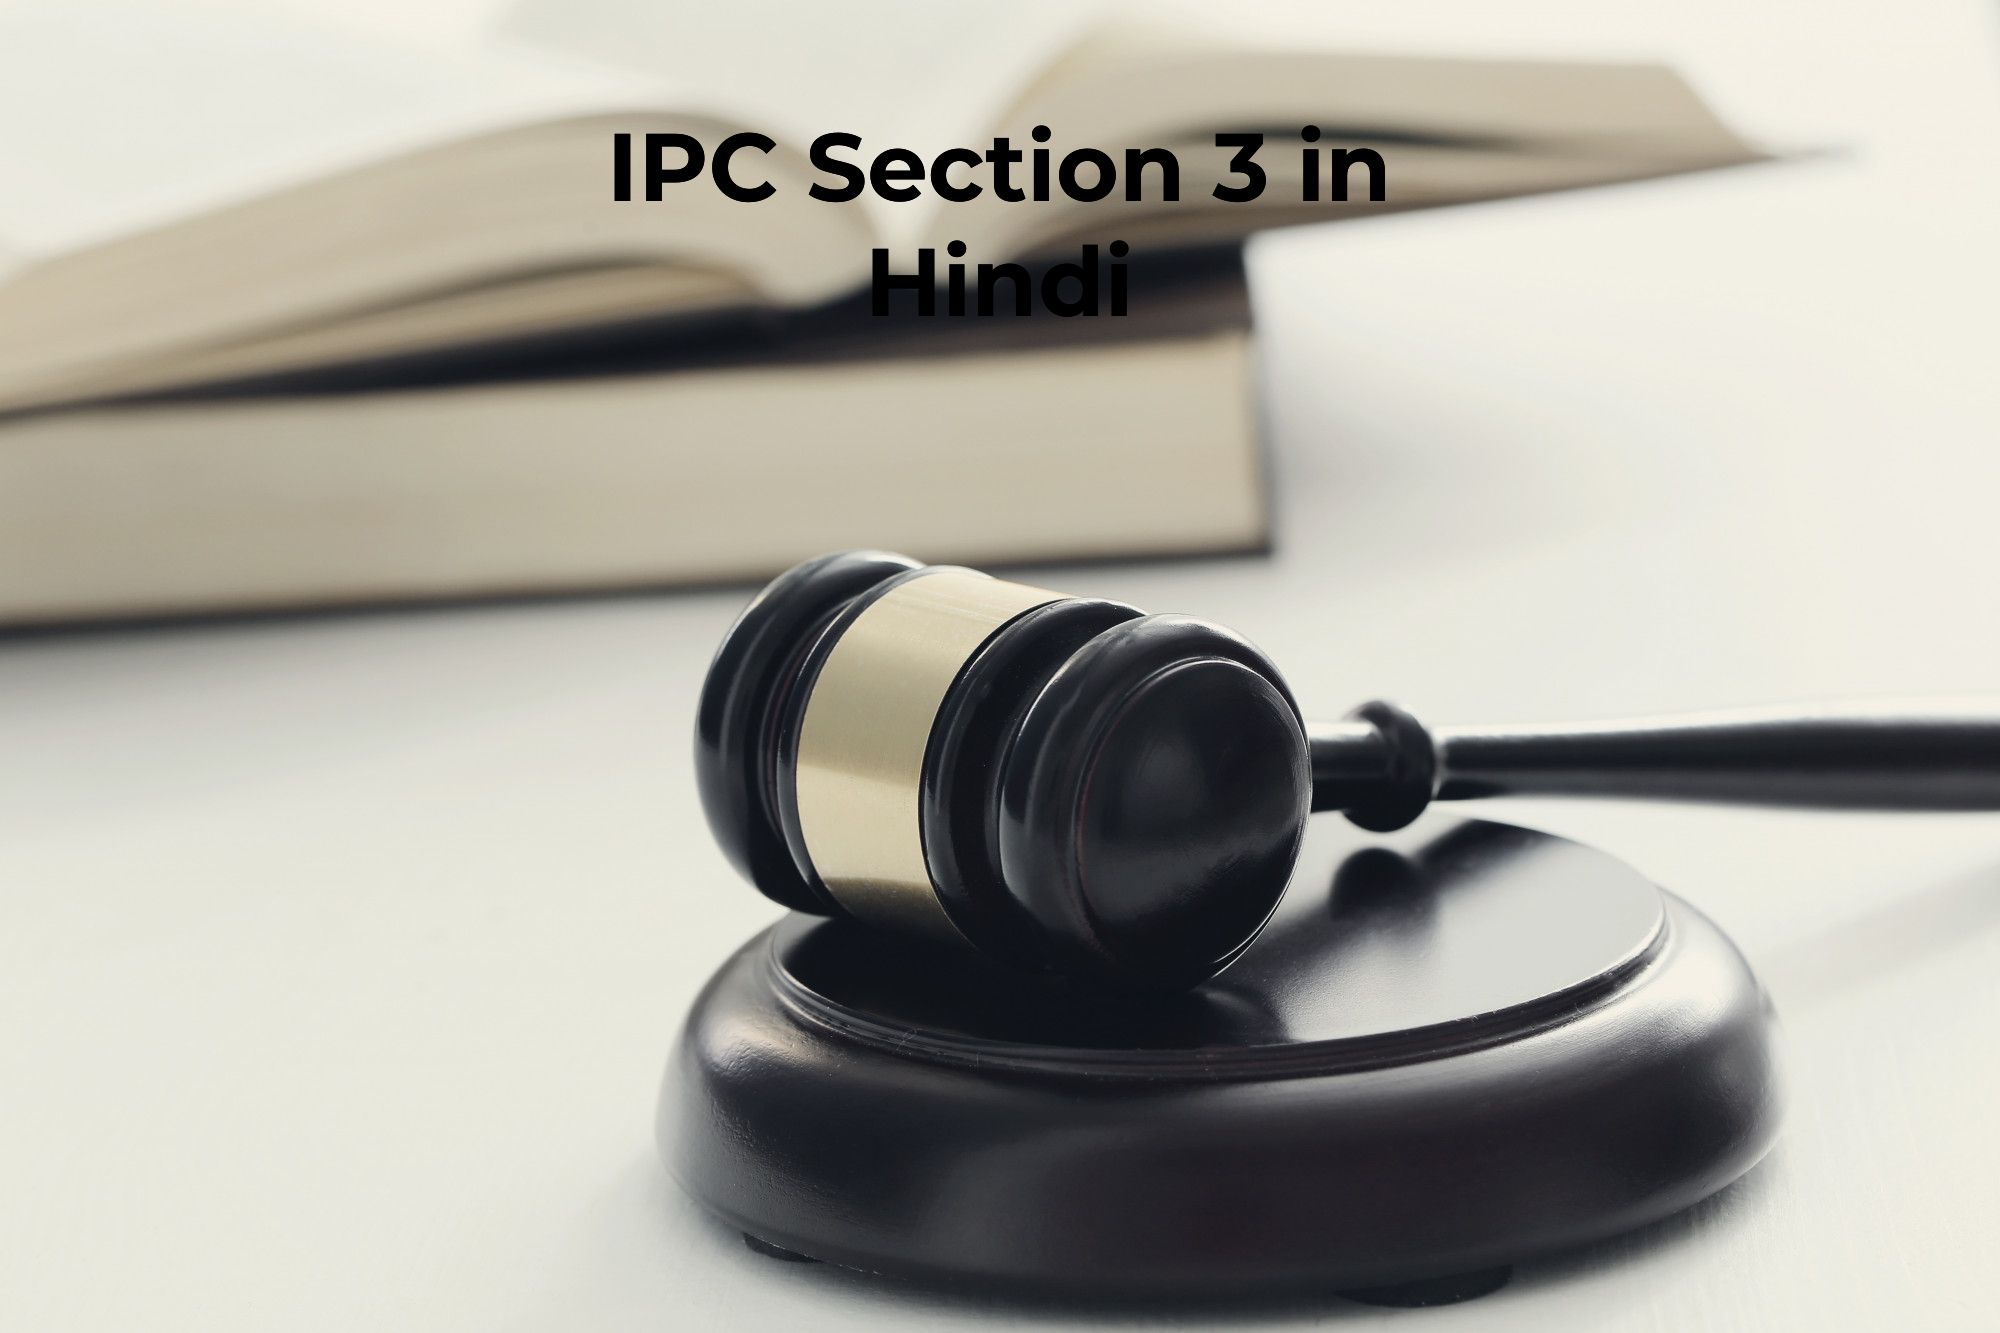 IPC Section 3 in Hindi